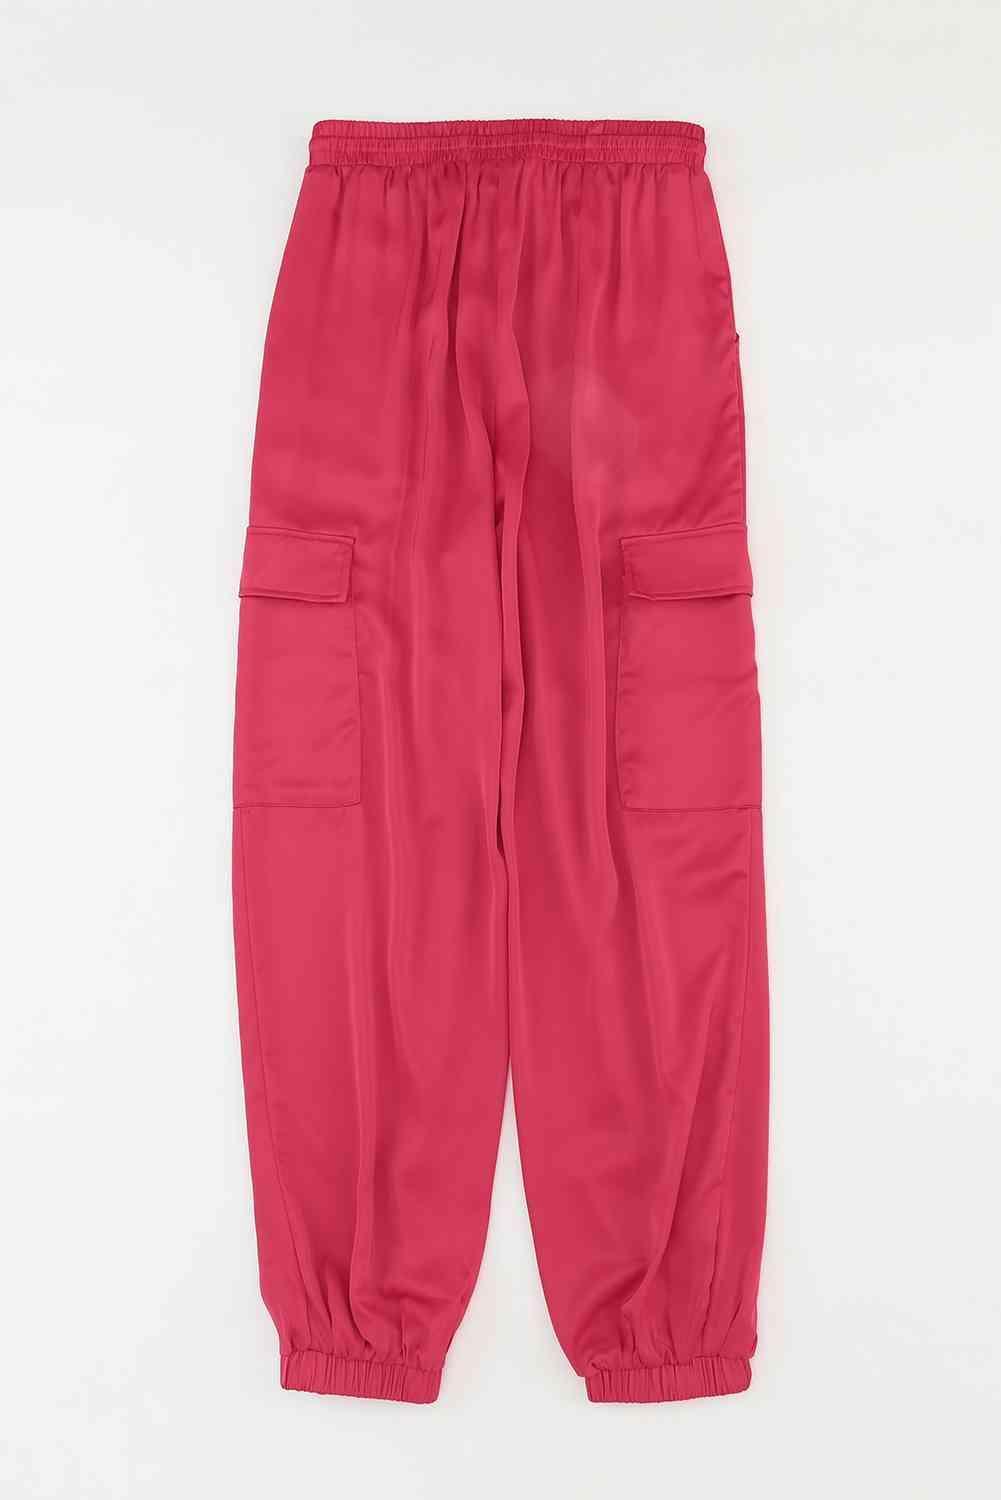 Long Pocketed Womens Tie Waist Pants - MXSTUDIO.COM